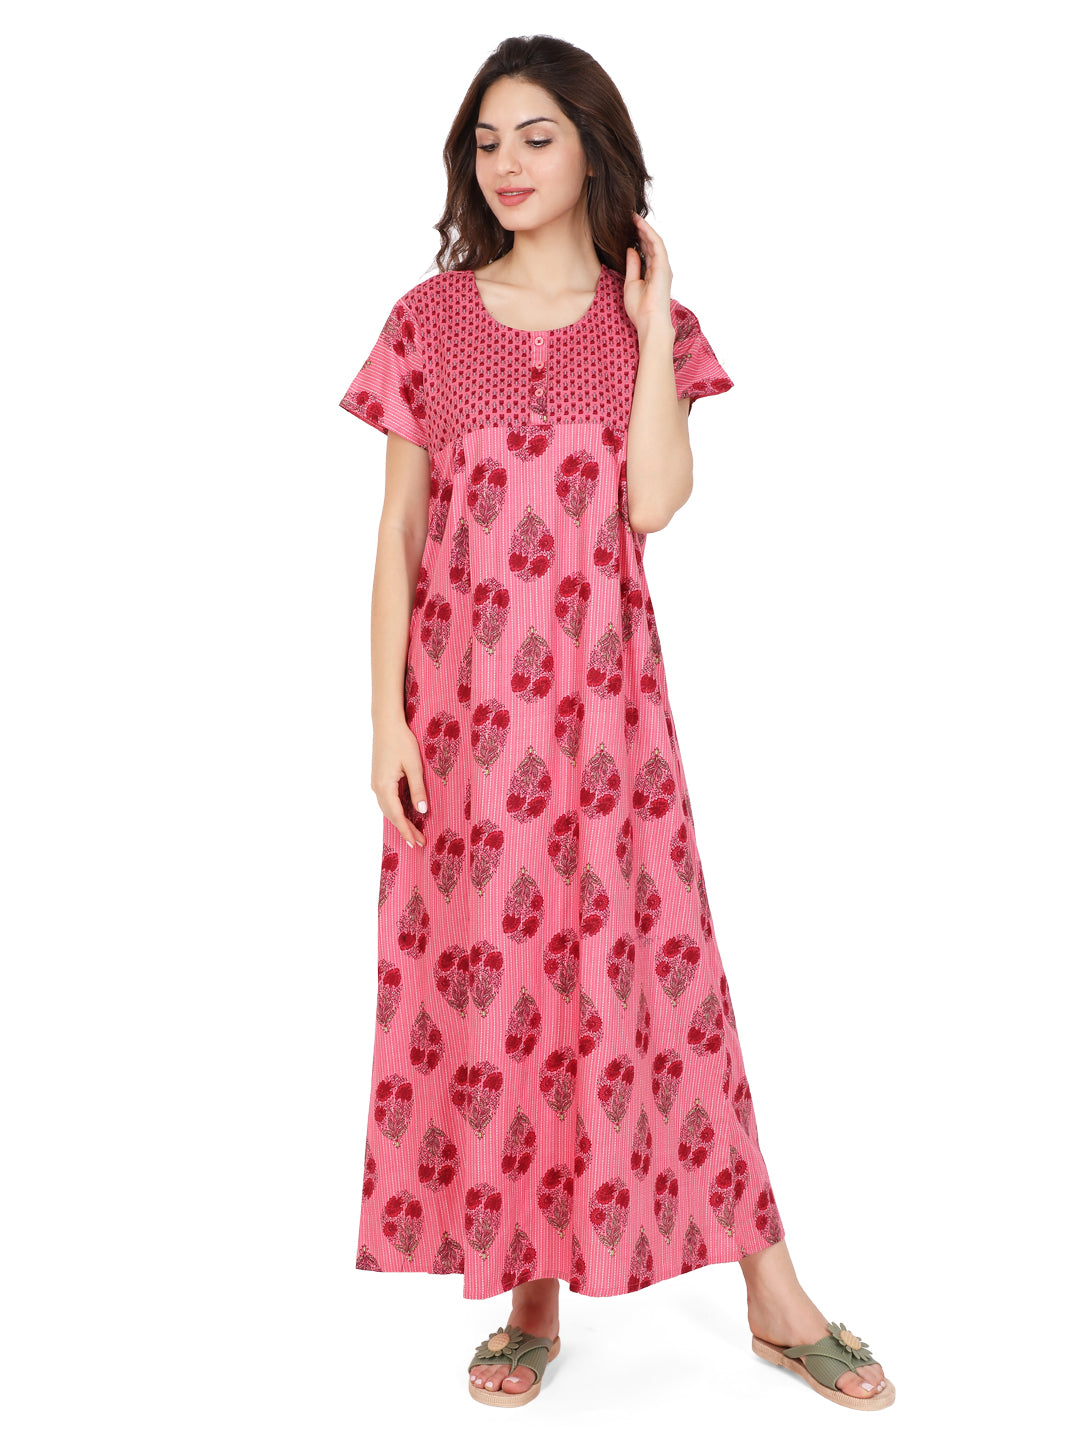 Evolove Women's 100% Cotton Printed Maxi Nightgown Long Nighty Sleepwe ...